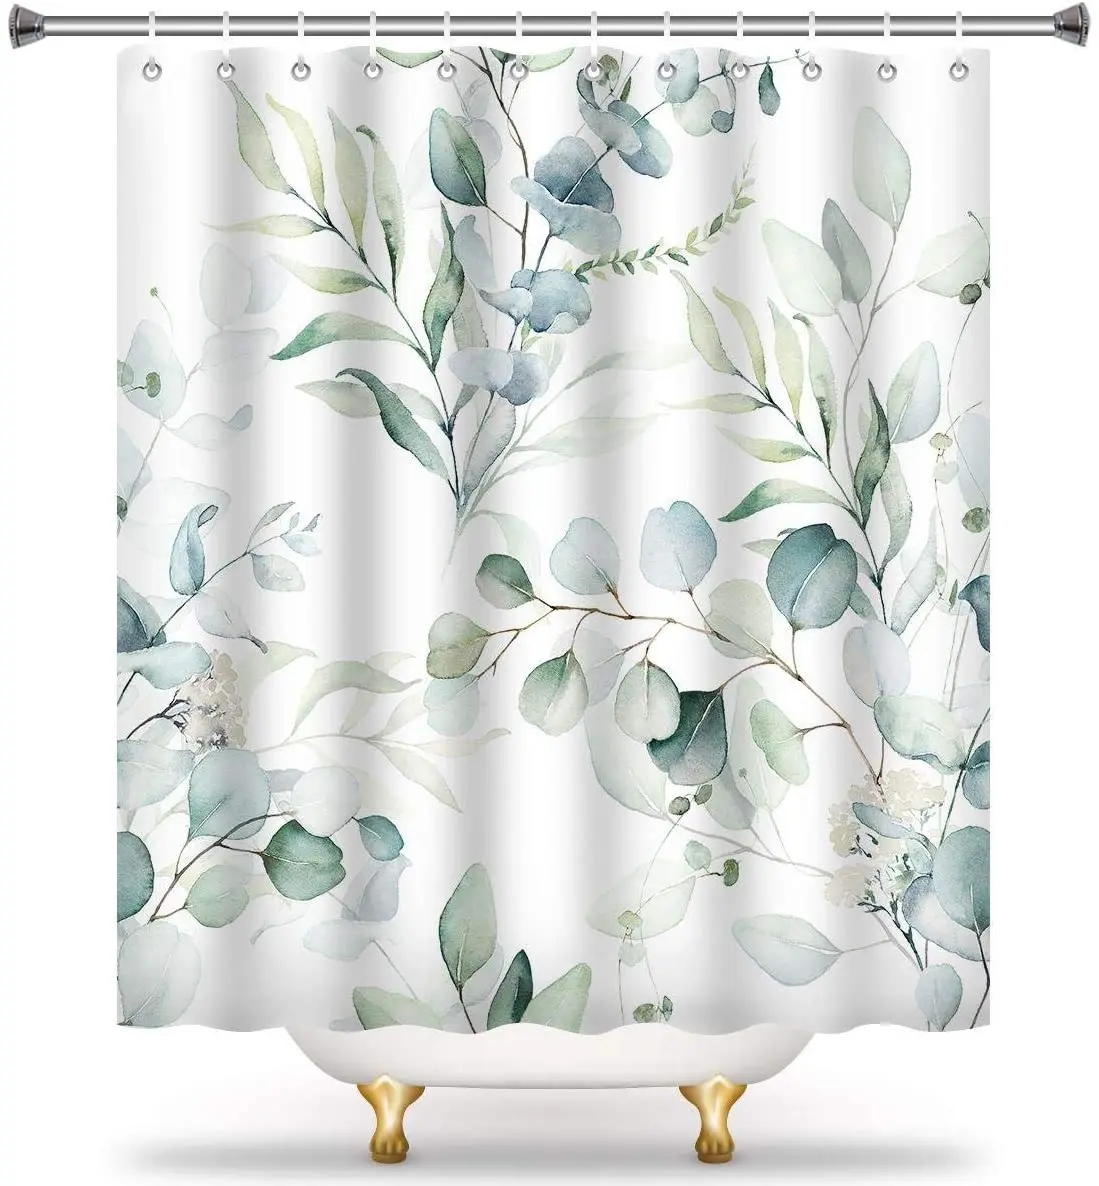 

Hot Sale digital printing decorative shower curtain waterproof for bathroom, Printed